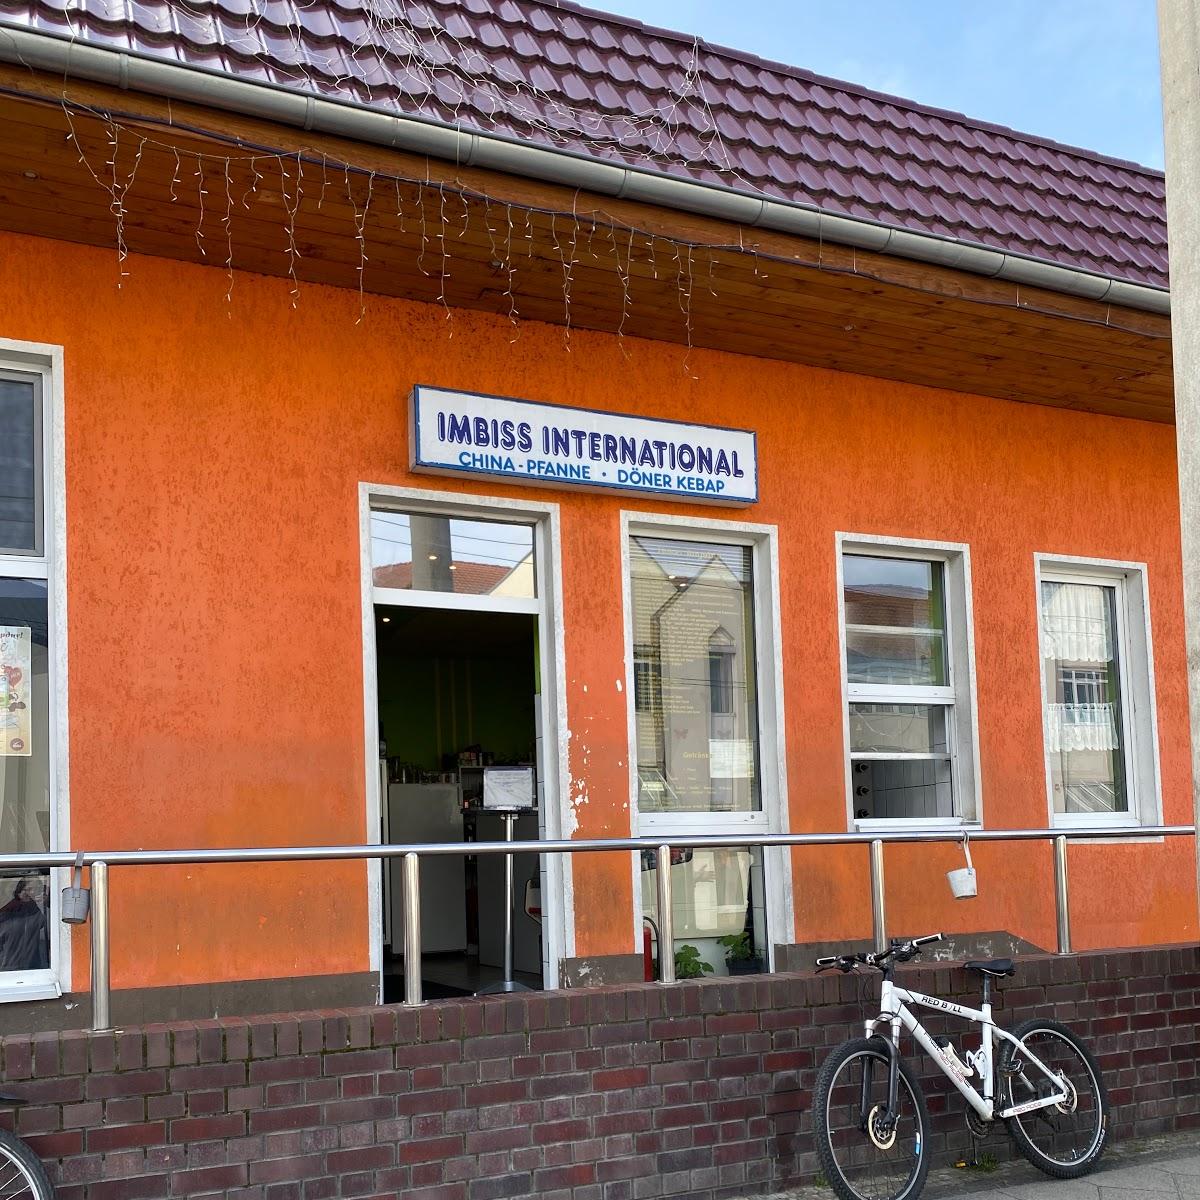 Restaurant "Imbiss international" in Eberswalde